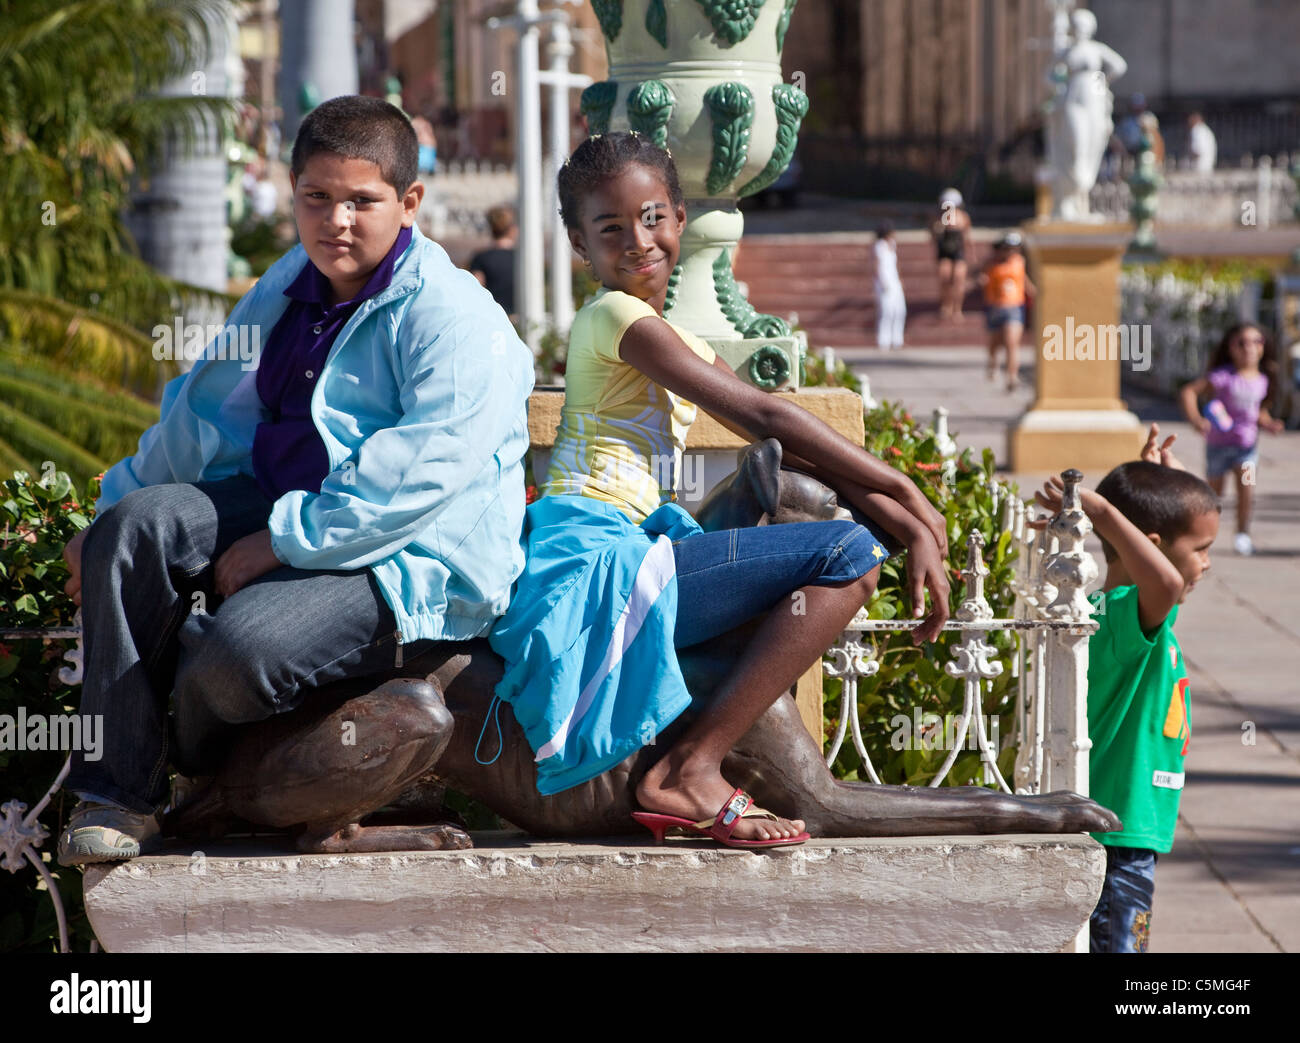 Cuba Trinidad. Un ragazzo e una ragazza in Plaza Mayor. Foto Stock